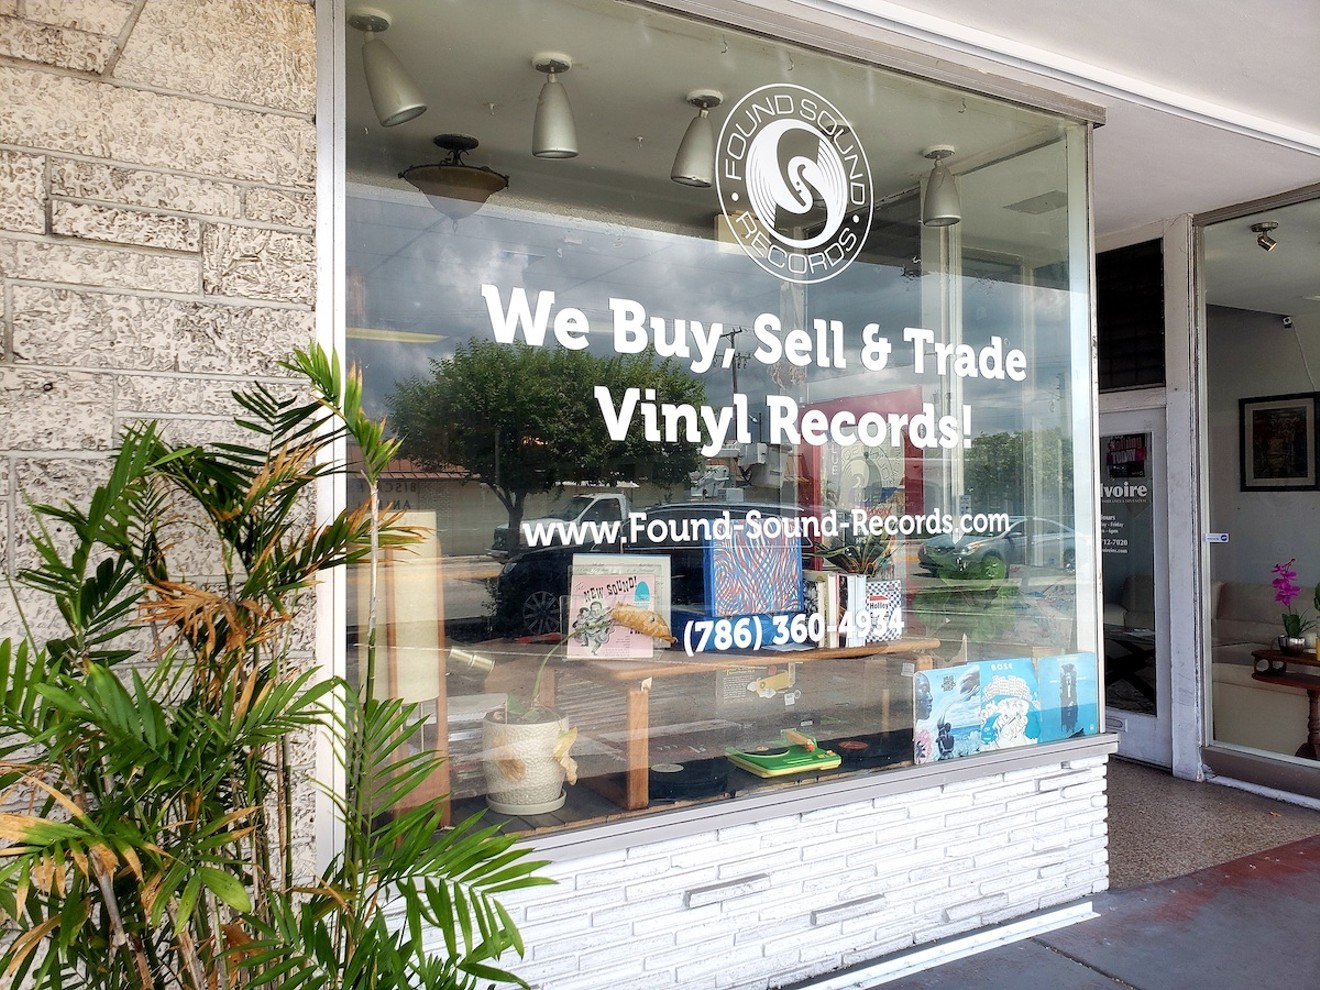 Found Sound Records sells used vinyl in North Miami.